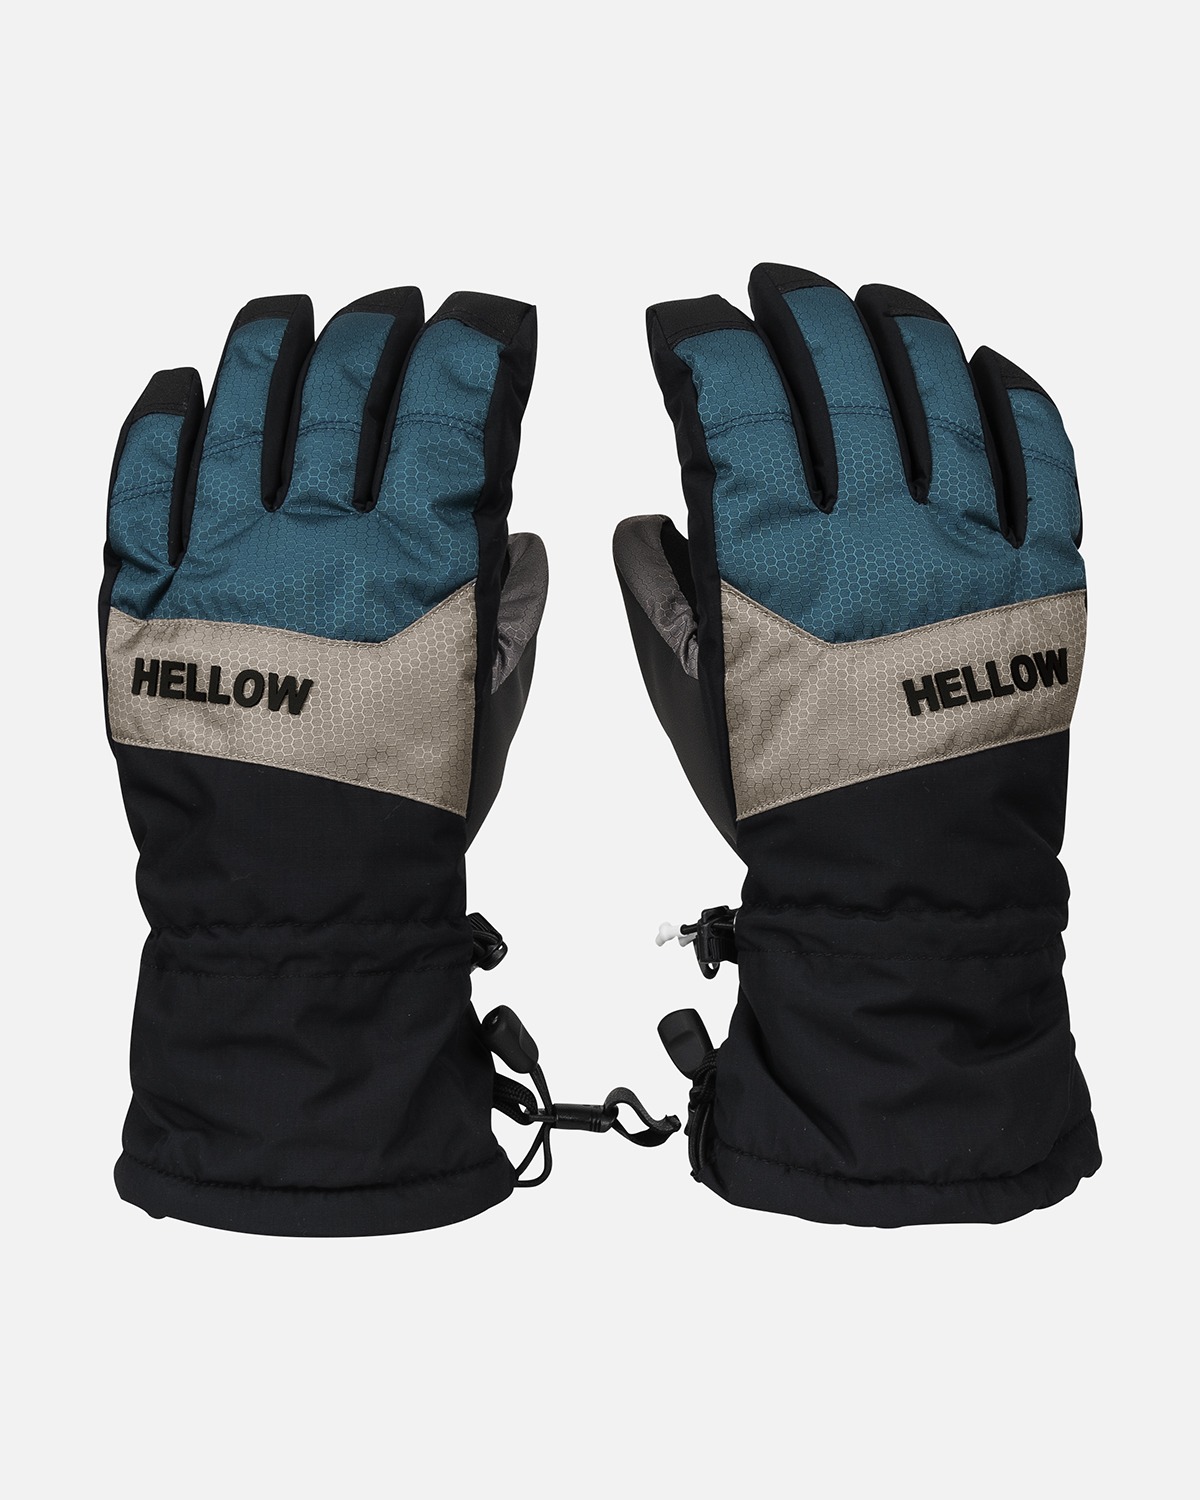 Hellow orda glove 2223 - teal